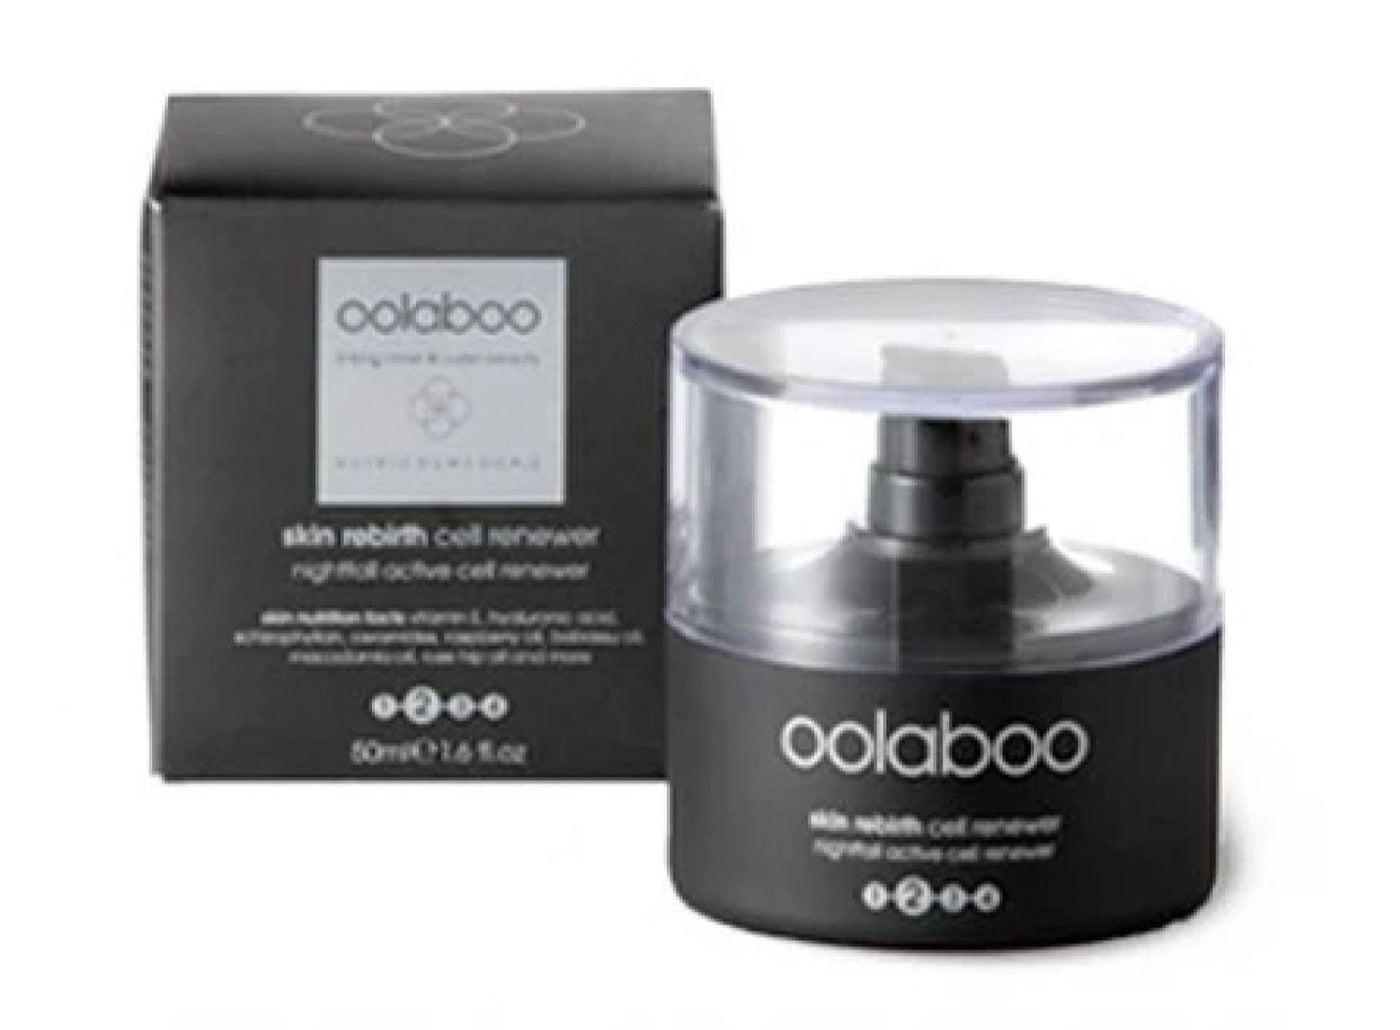 Oolaboo Skin Rebirth Cell Renewer 50 ml - Salon Warehouse